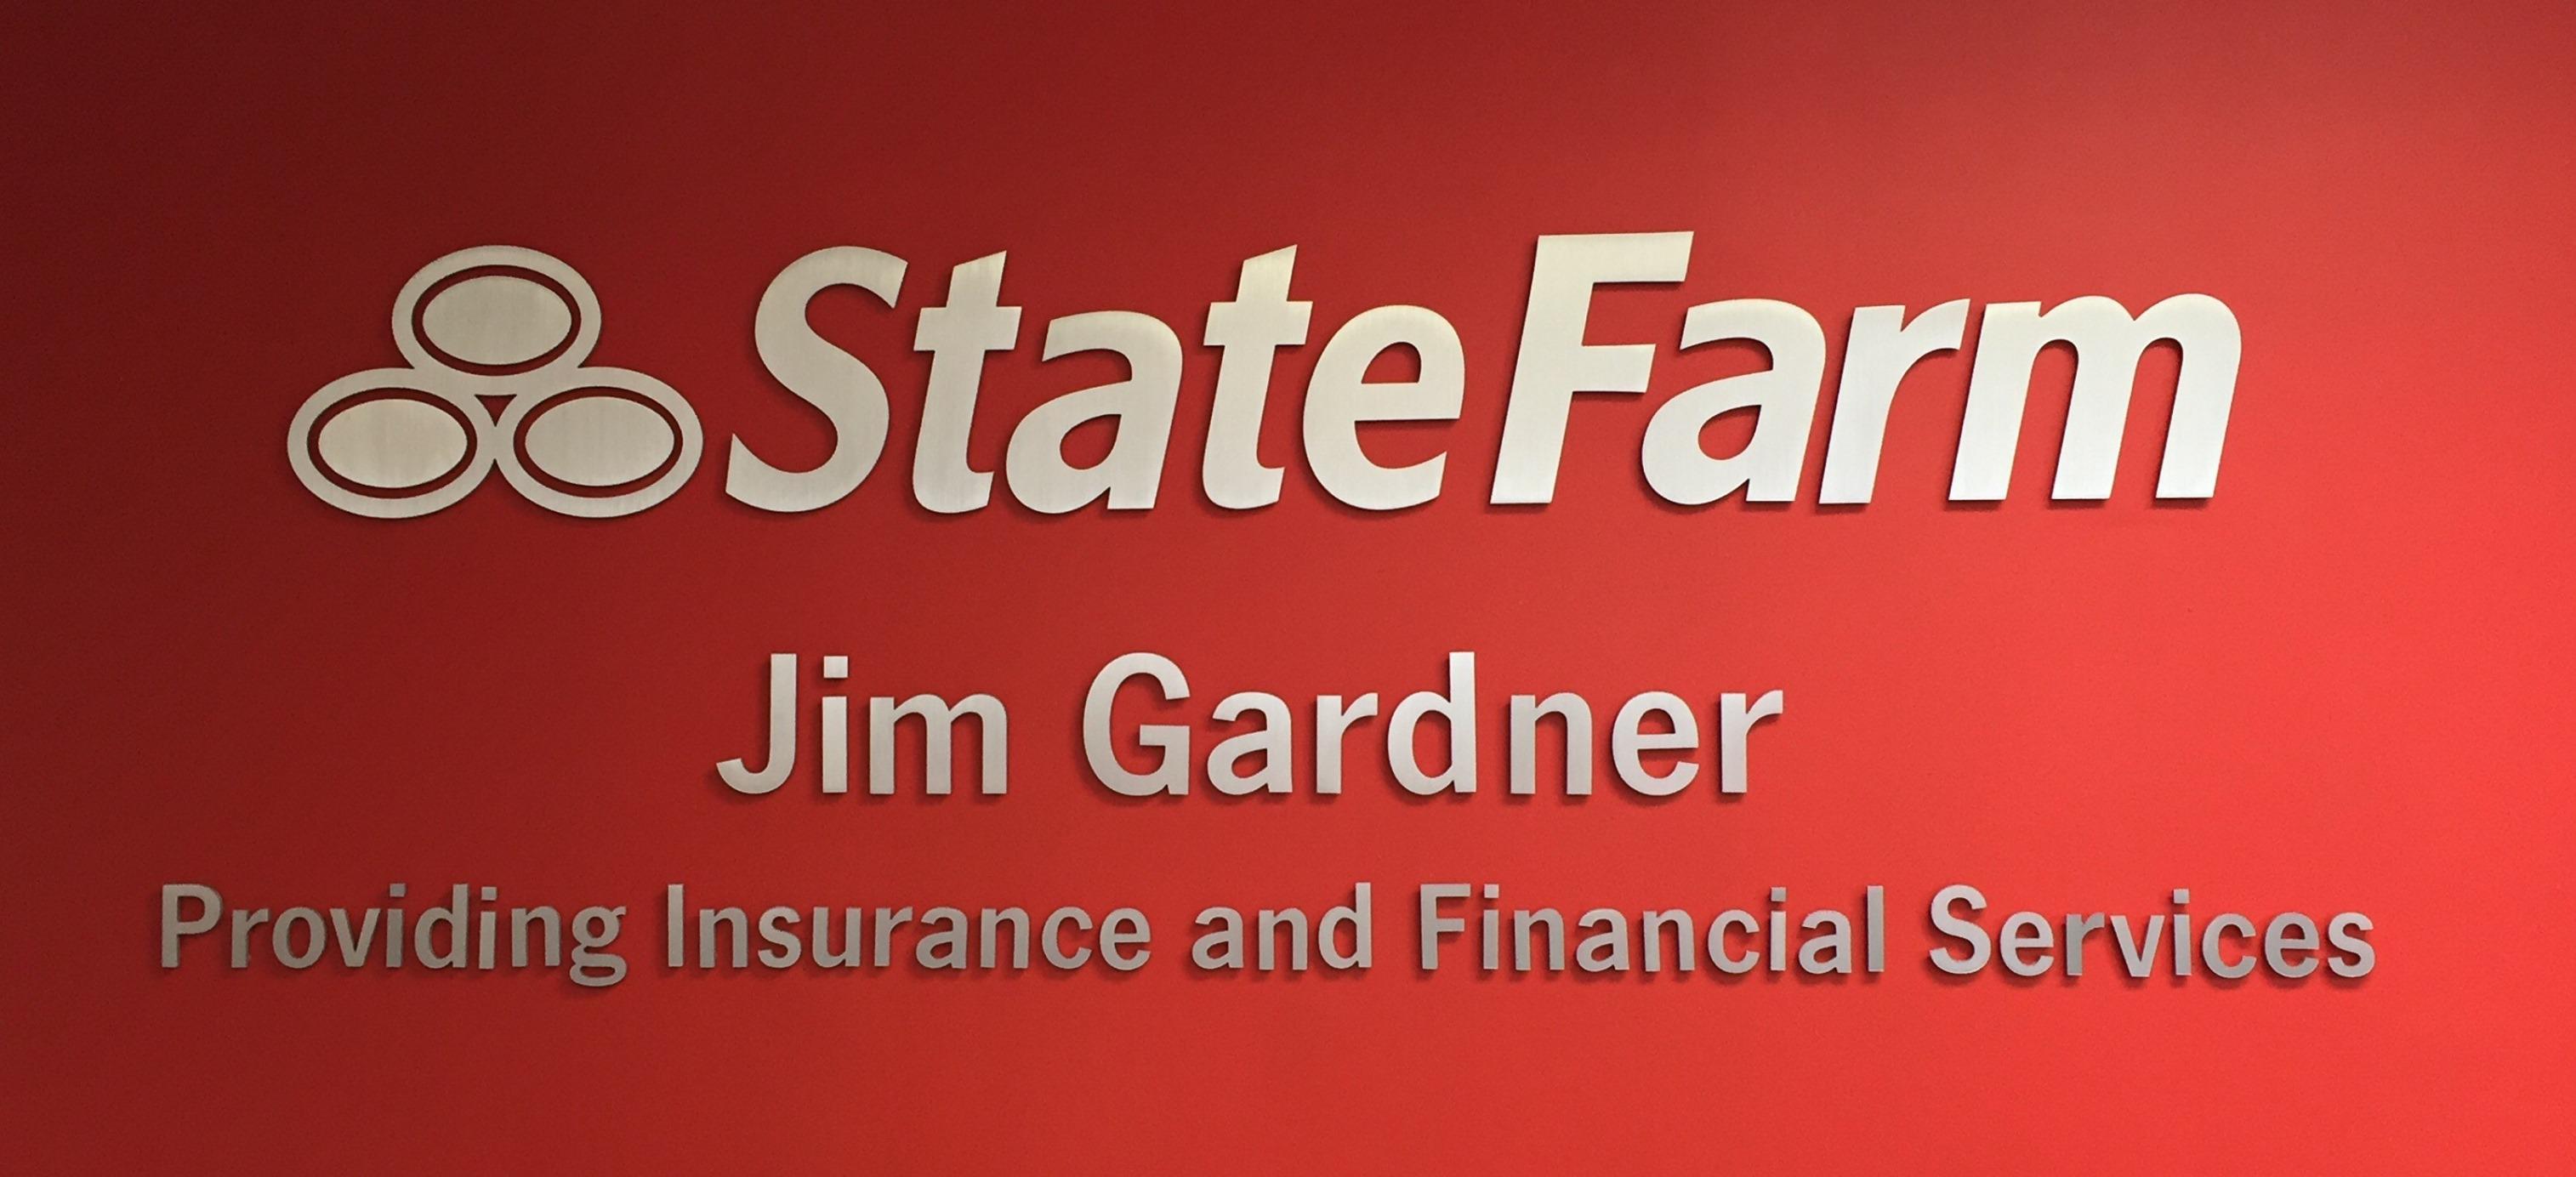 Jim Gardner - State Farm Insurance Agent - Allentown, PA 18106 - (610)395-4474 | ShowMeLocal.com